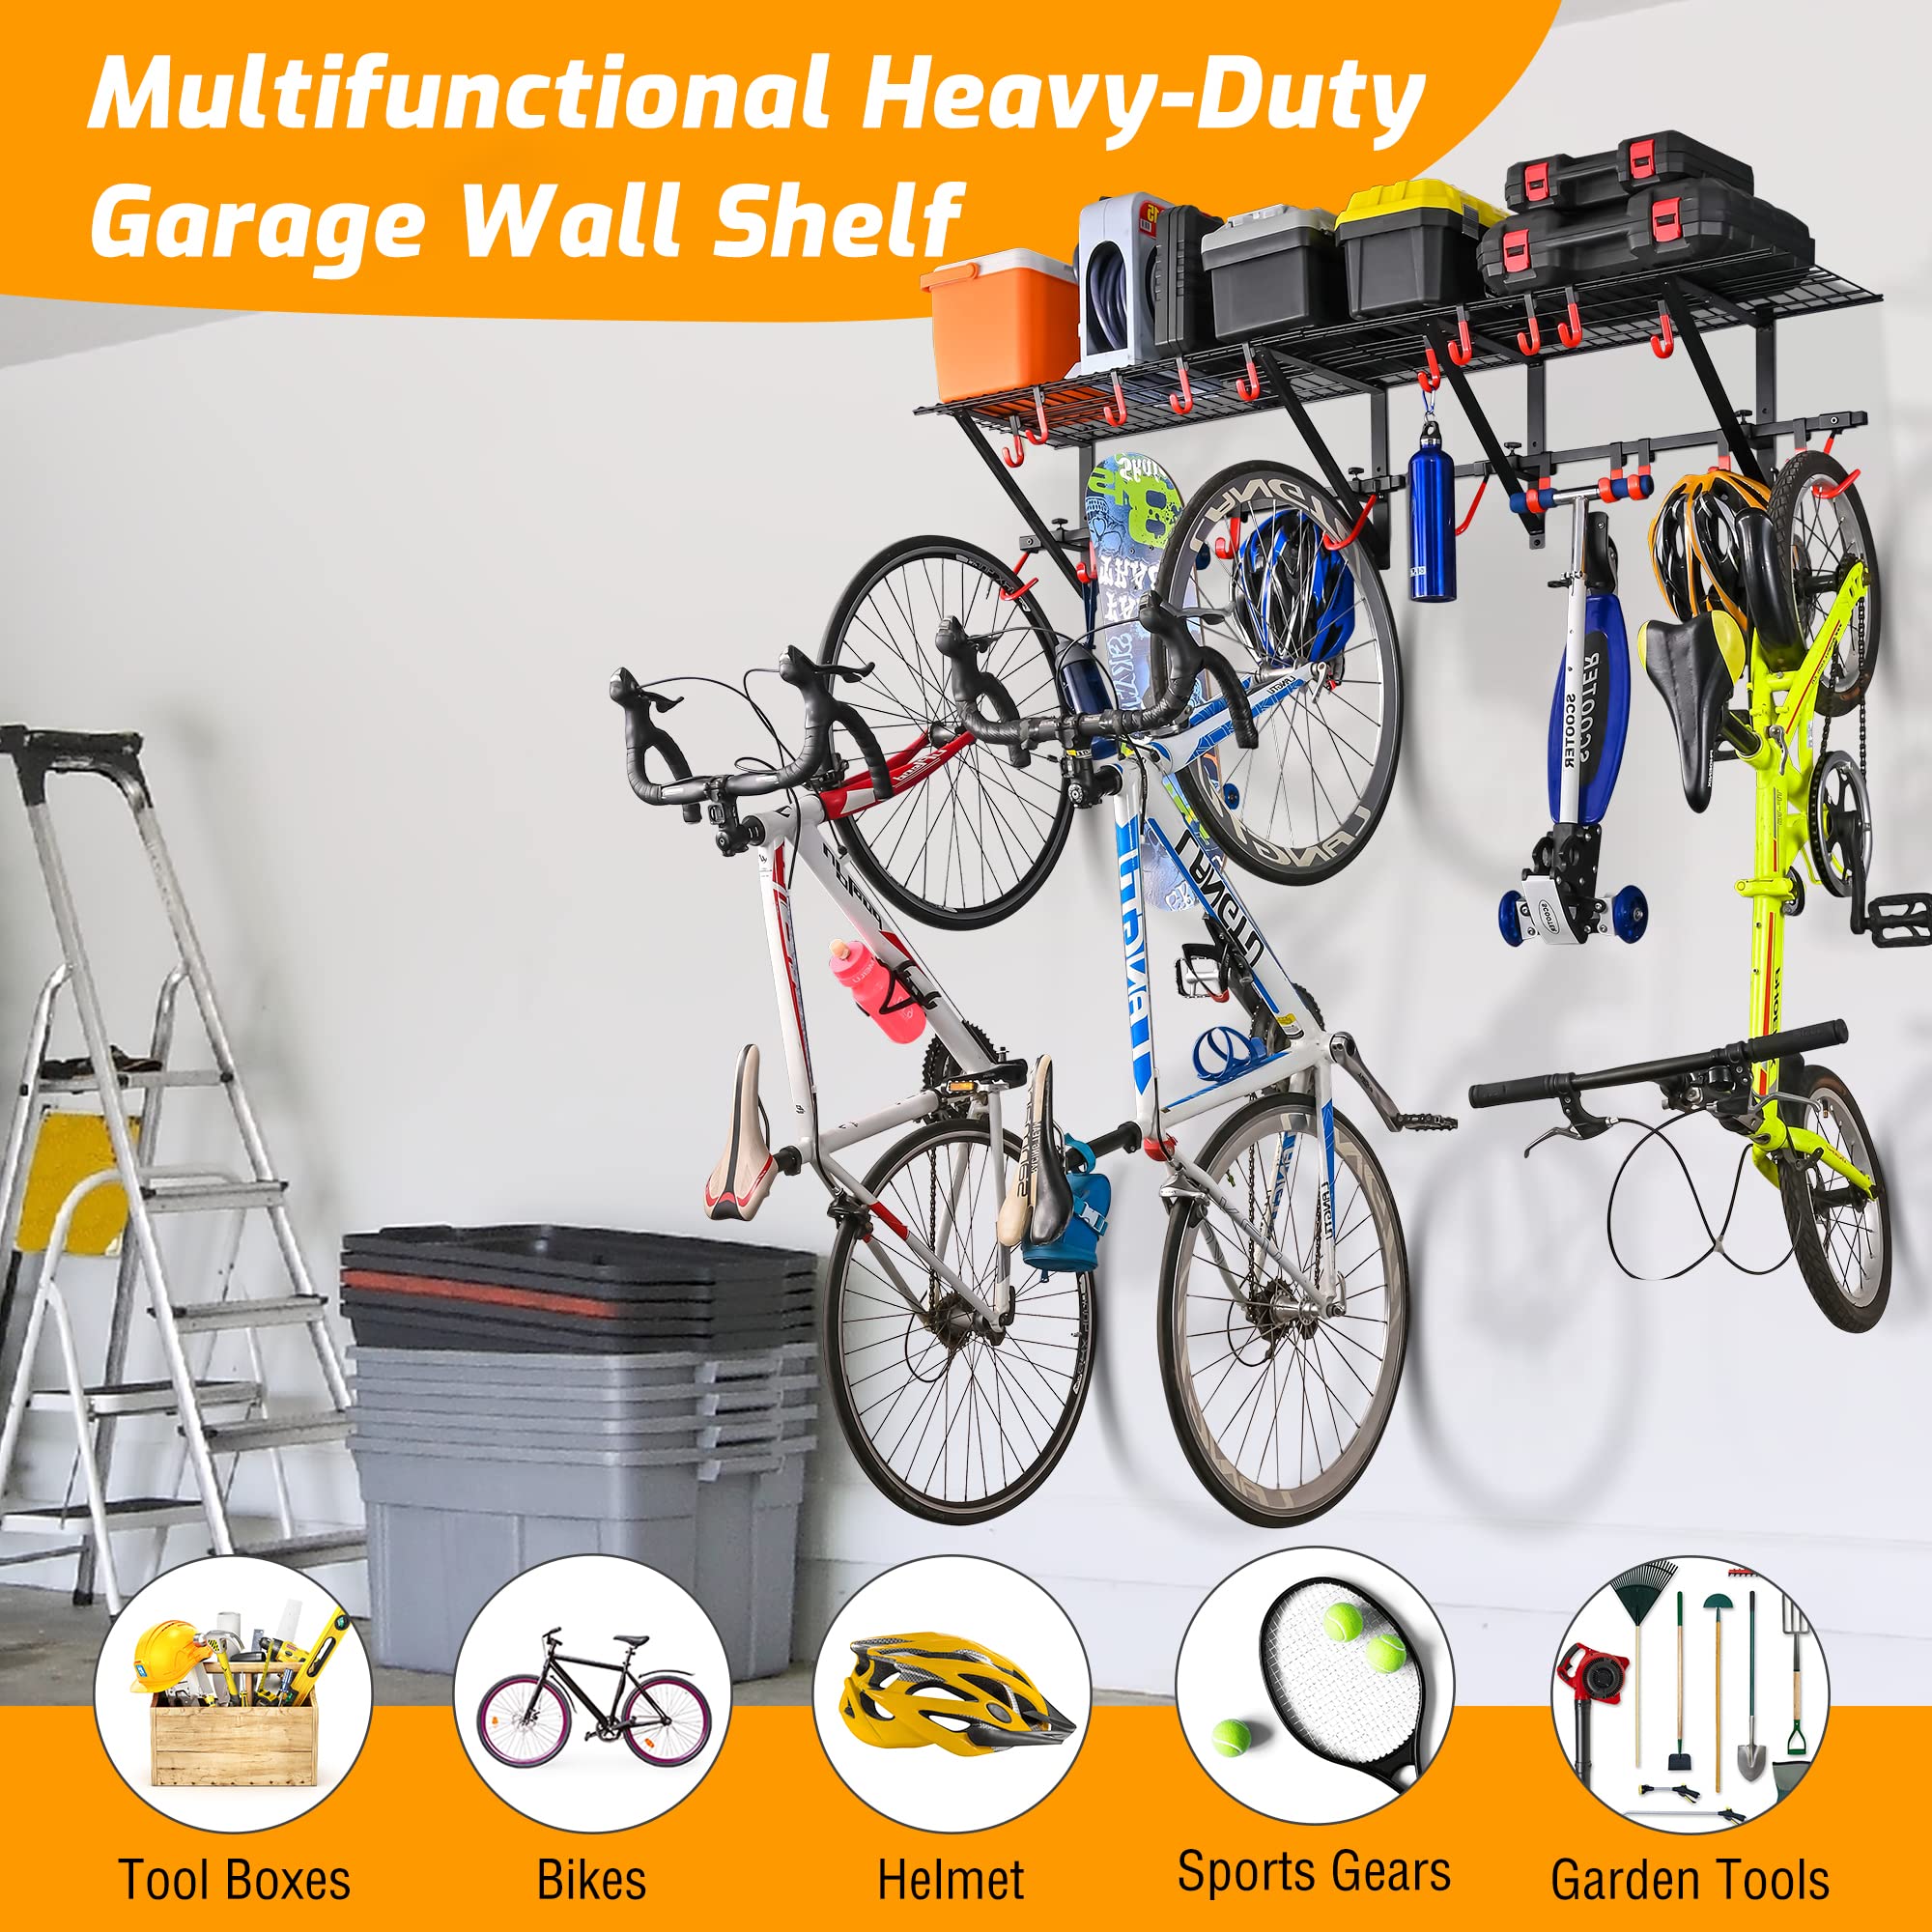 PLKOW Garage Wall Shelving Includes Bike Hooks, Sturdy Adjustable Garage Shelving Wall Mount Garage/Organizer (Black, 2-Pack)